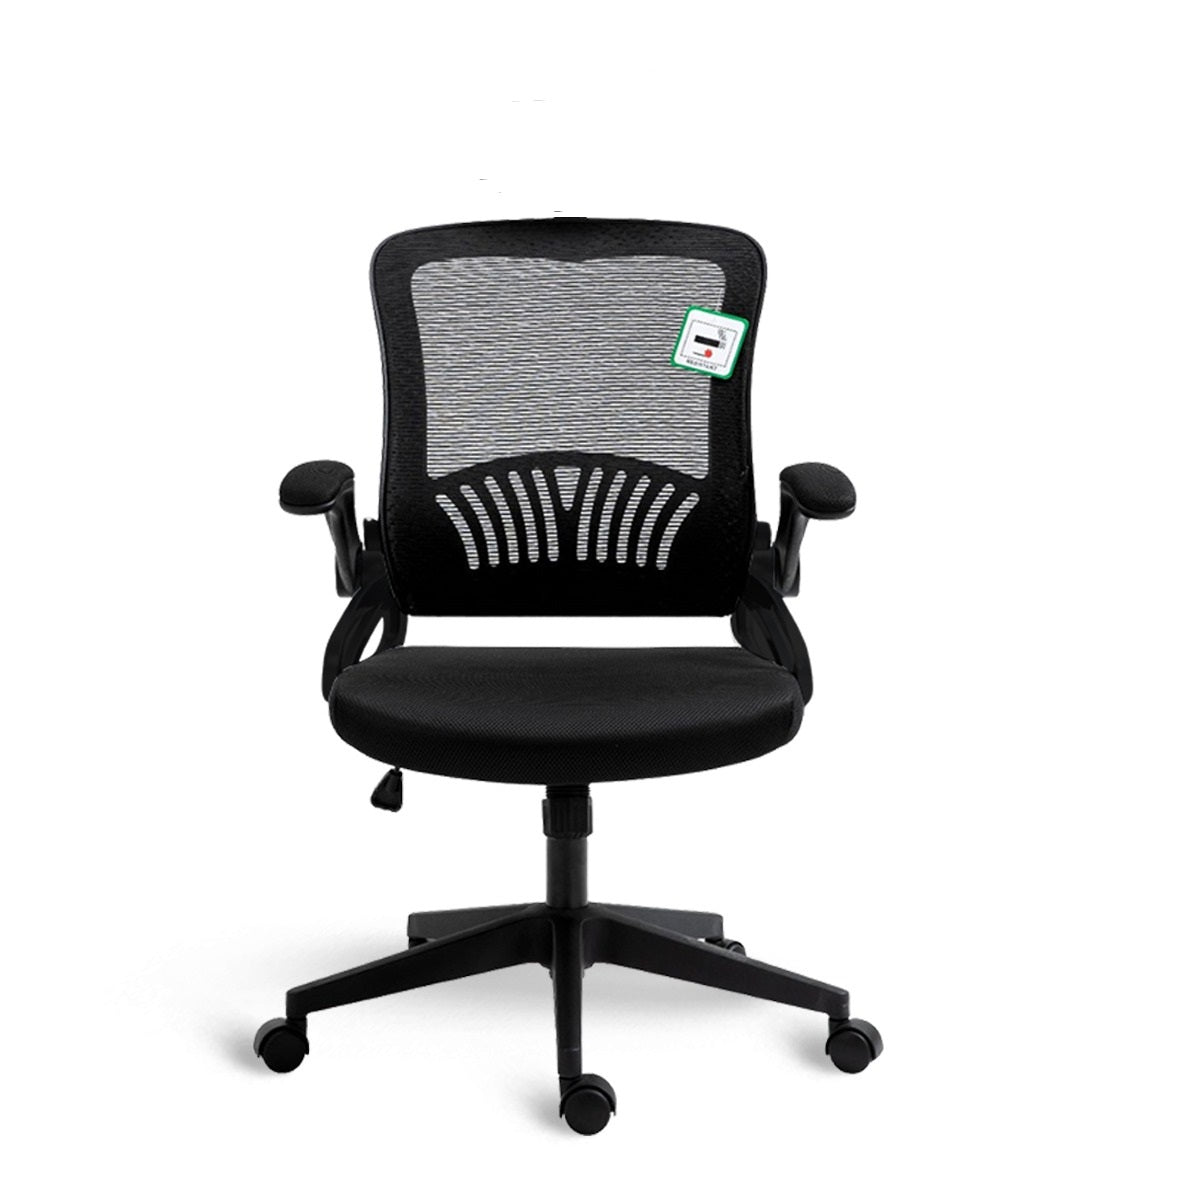 Miarrott Office Chairs